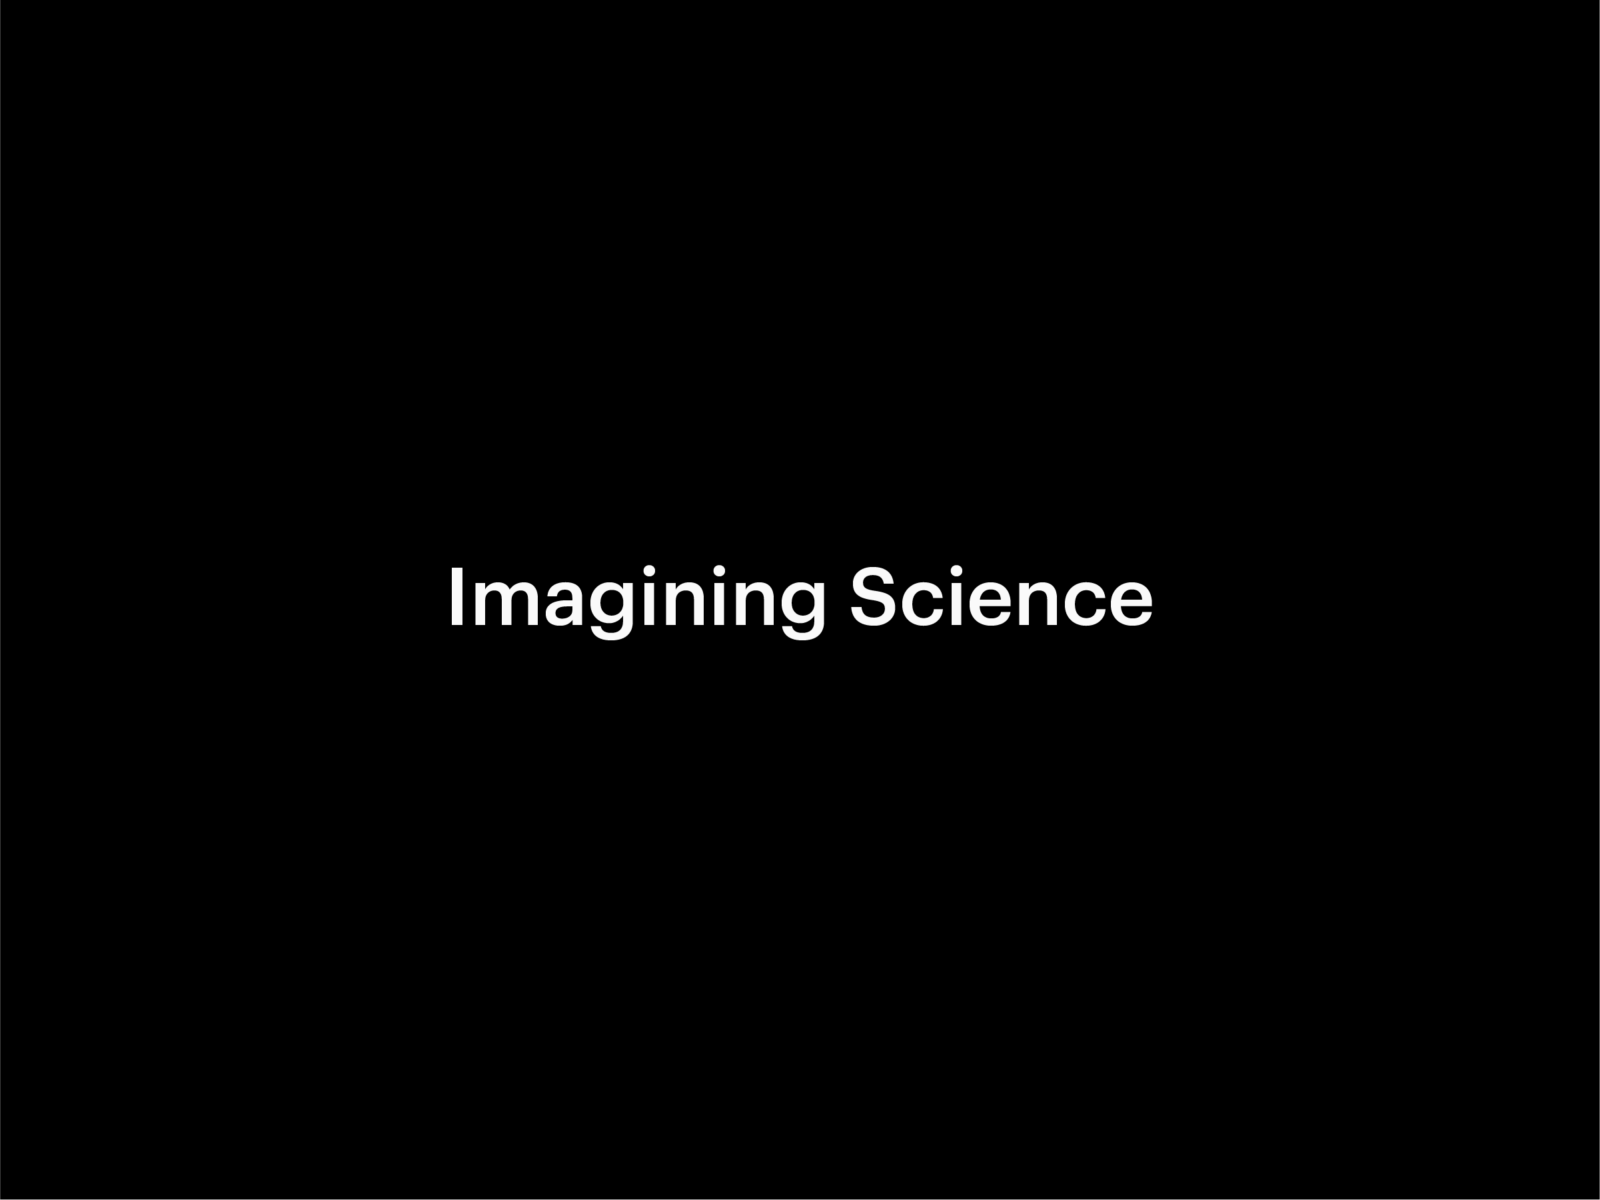 Imagining Science conceptual visual essay title